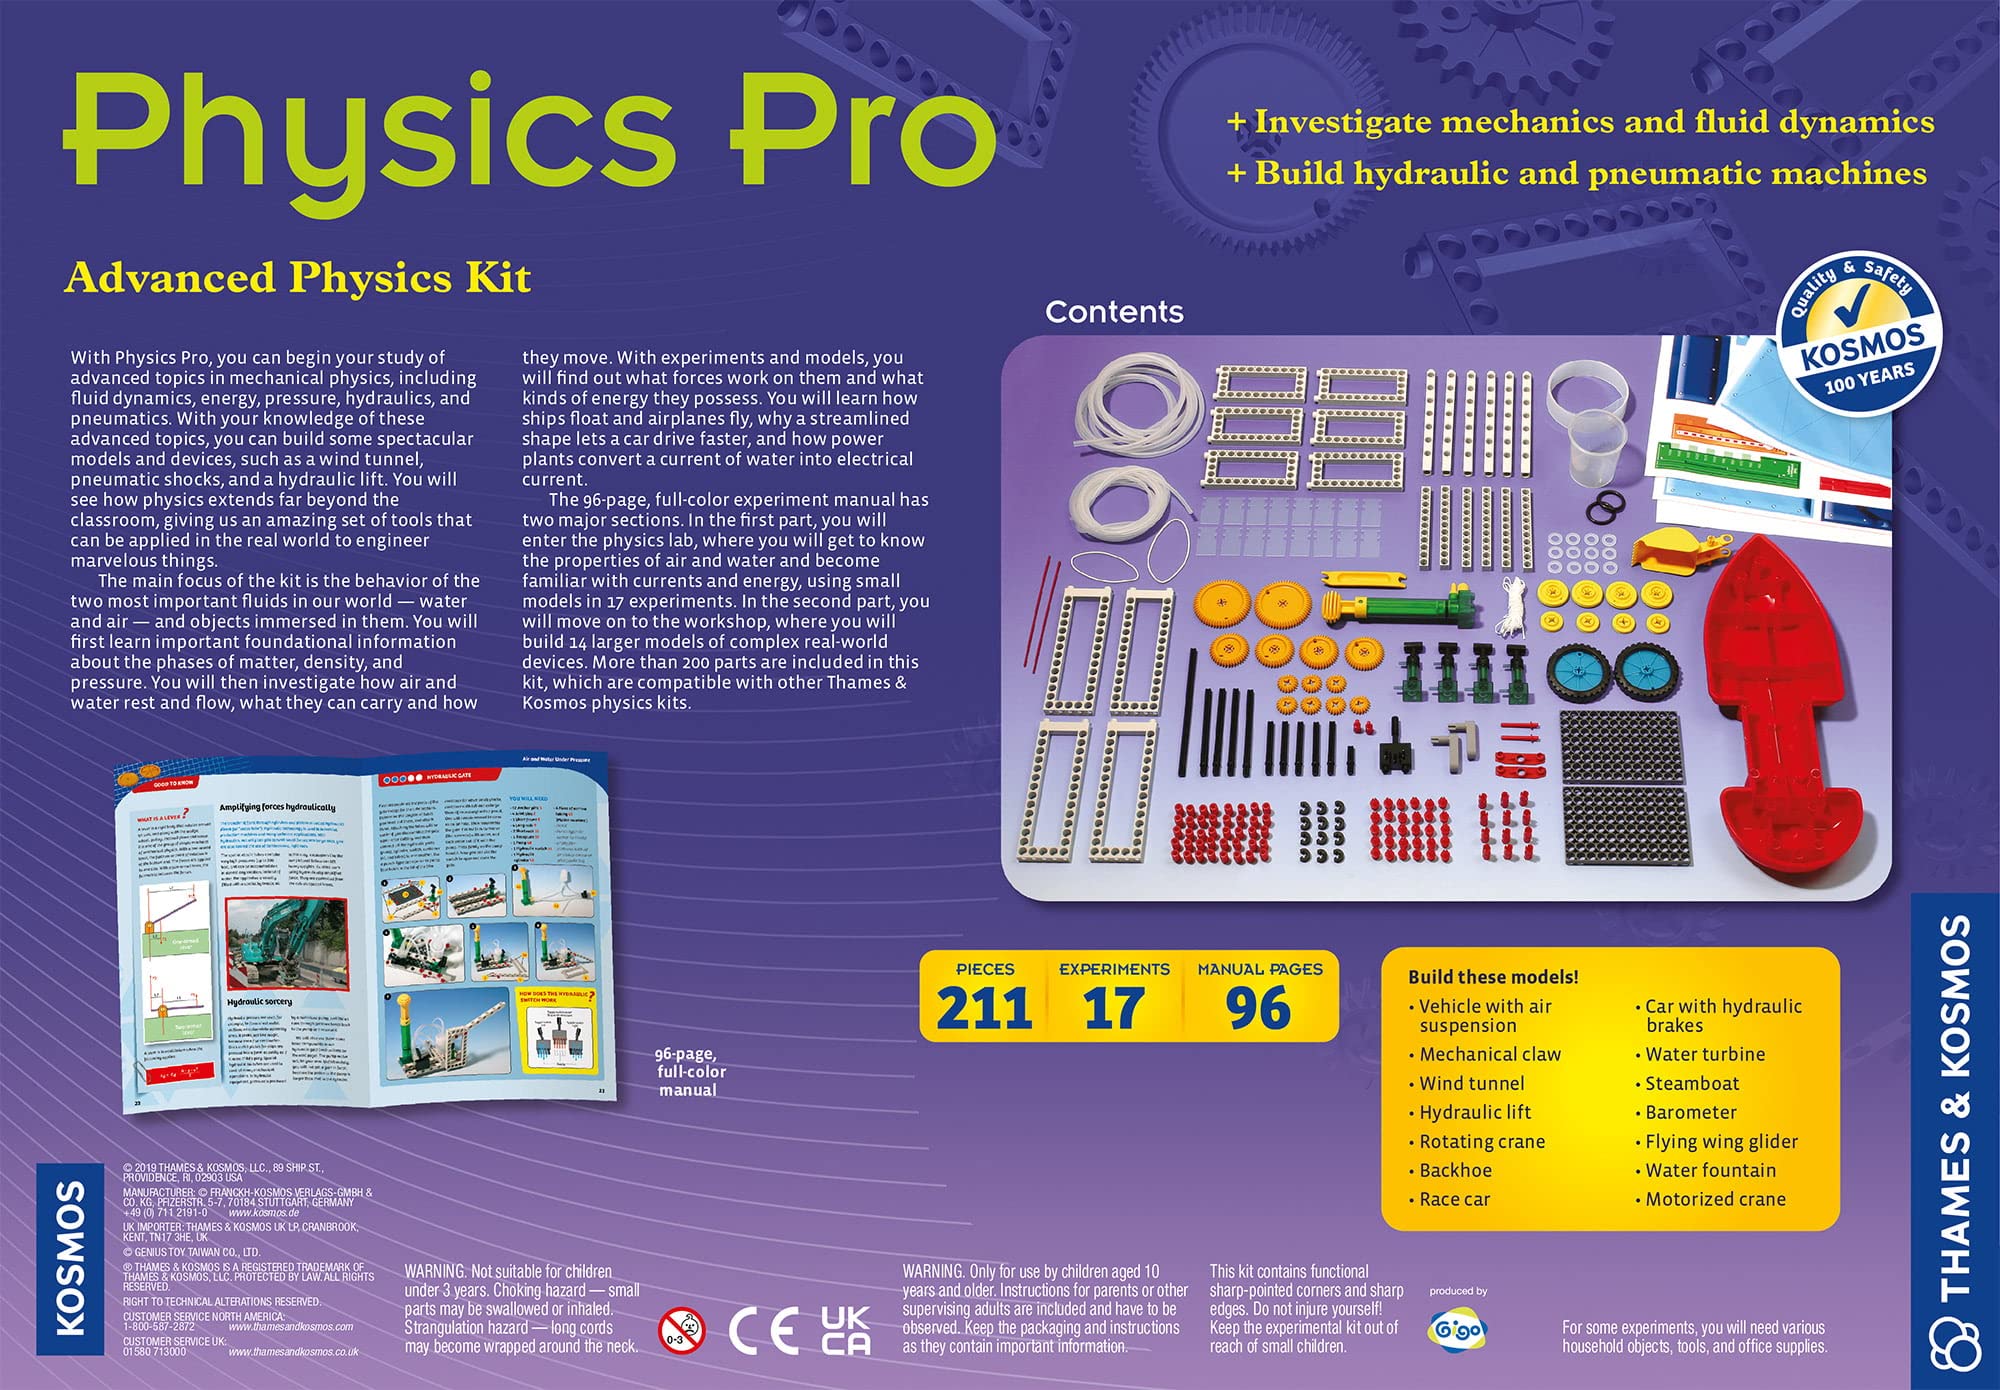 Thames & Kosmos Physics Pro (V 2.0) Science Kit | 96 Page Color Manual | 31 Experiments | Advanced Physics Education Kit | Parents' Choice Silver Award Winner